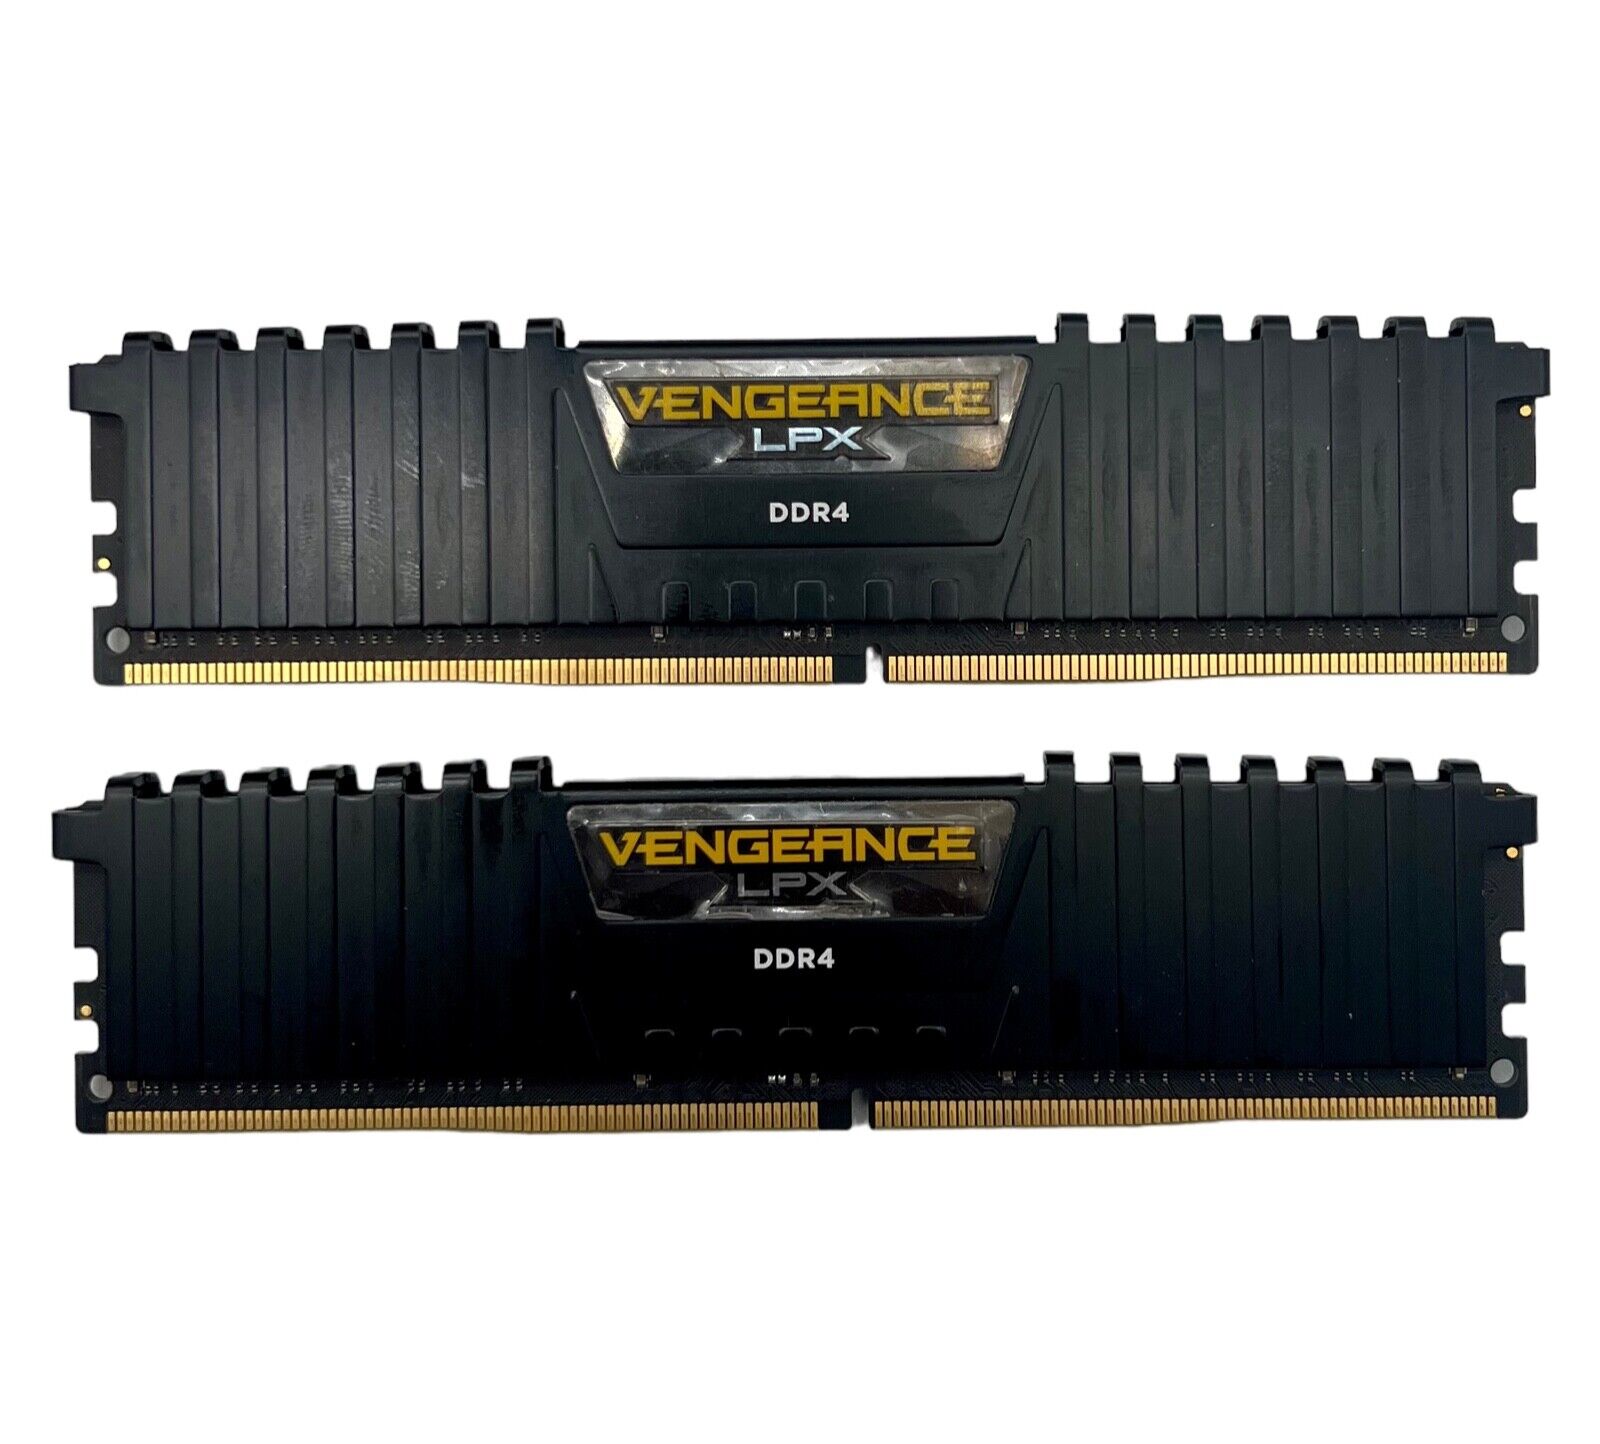 Vengeance LPX 32GB (1x4GB) RAM PC4-24000 DDR4-3000 SDRAM CMK32GX4M2B3000C15